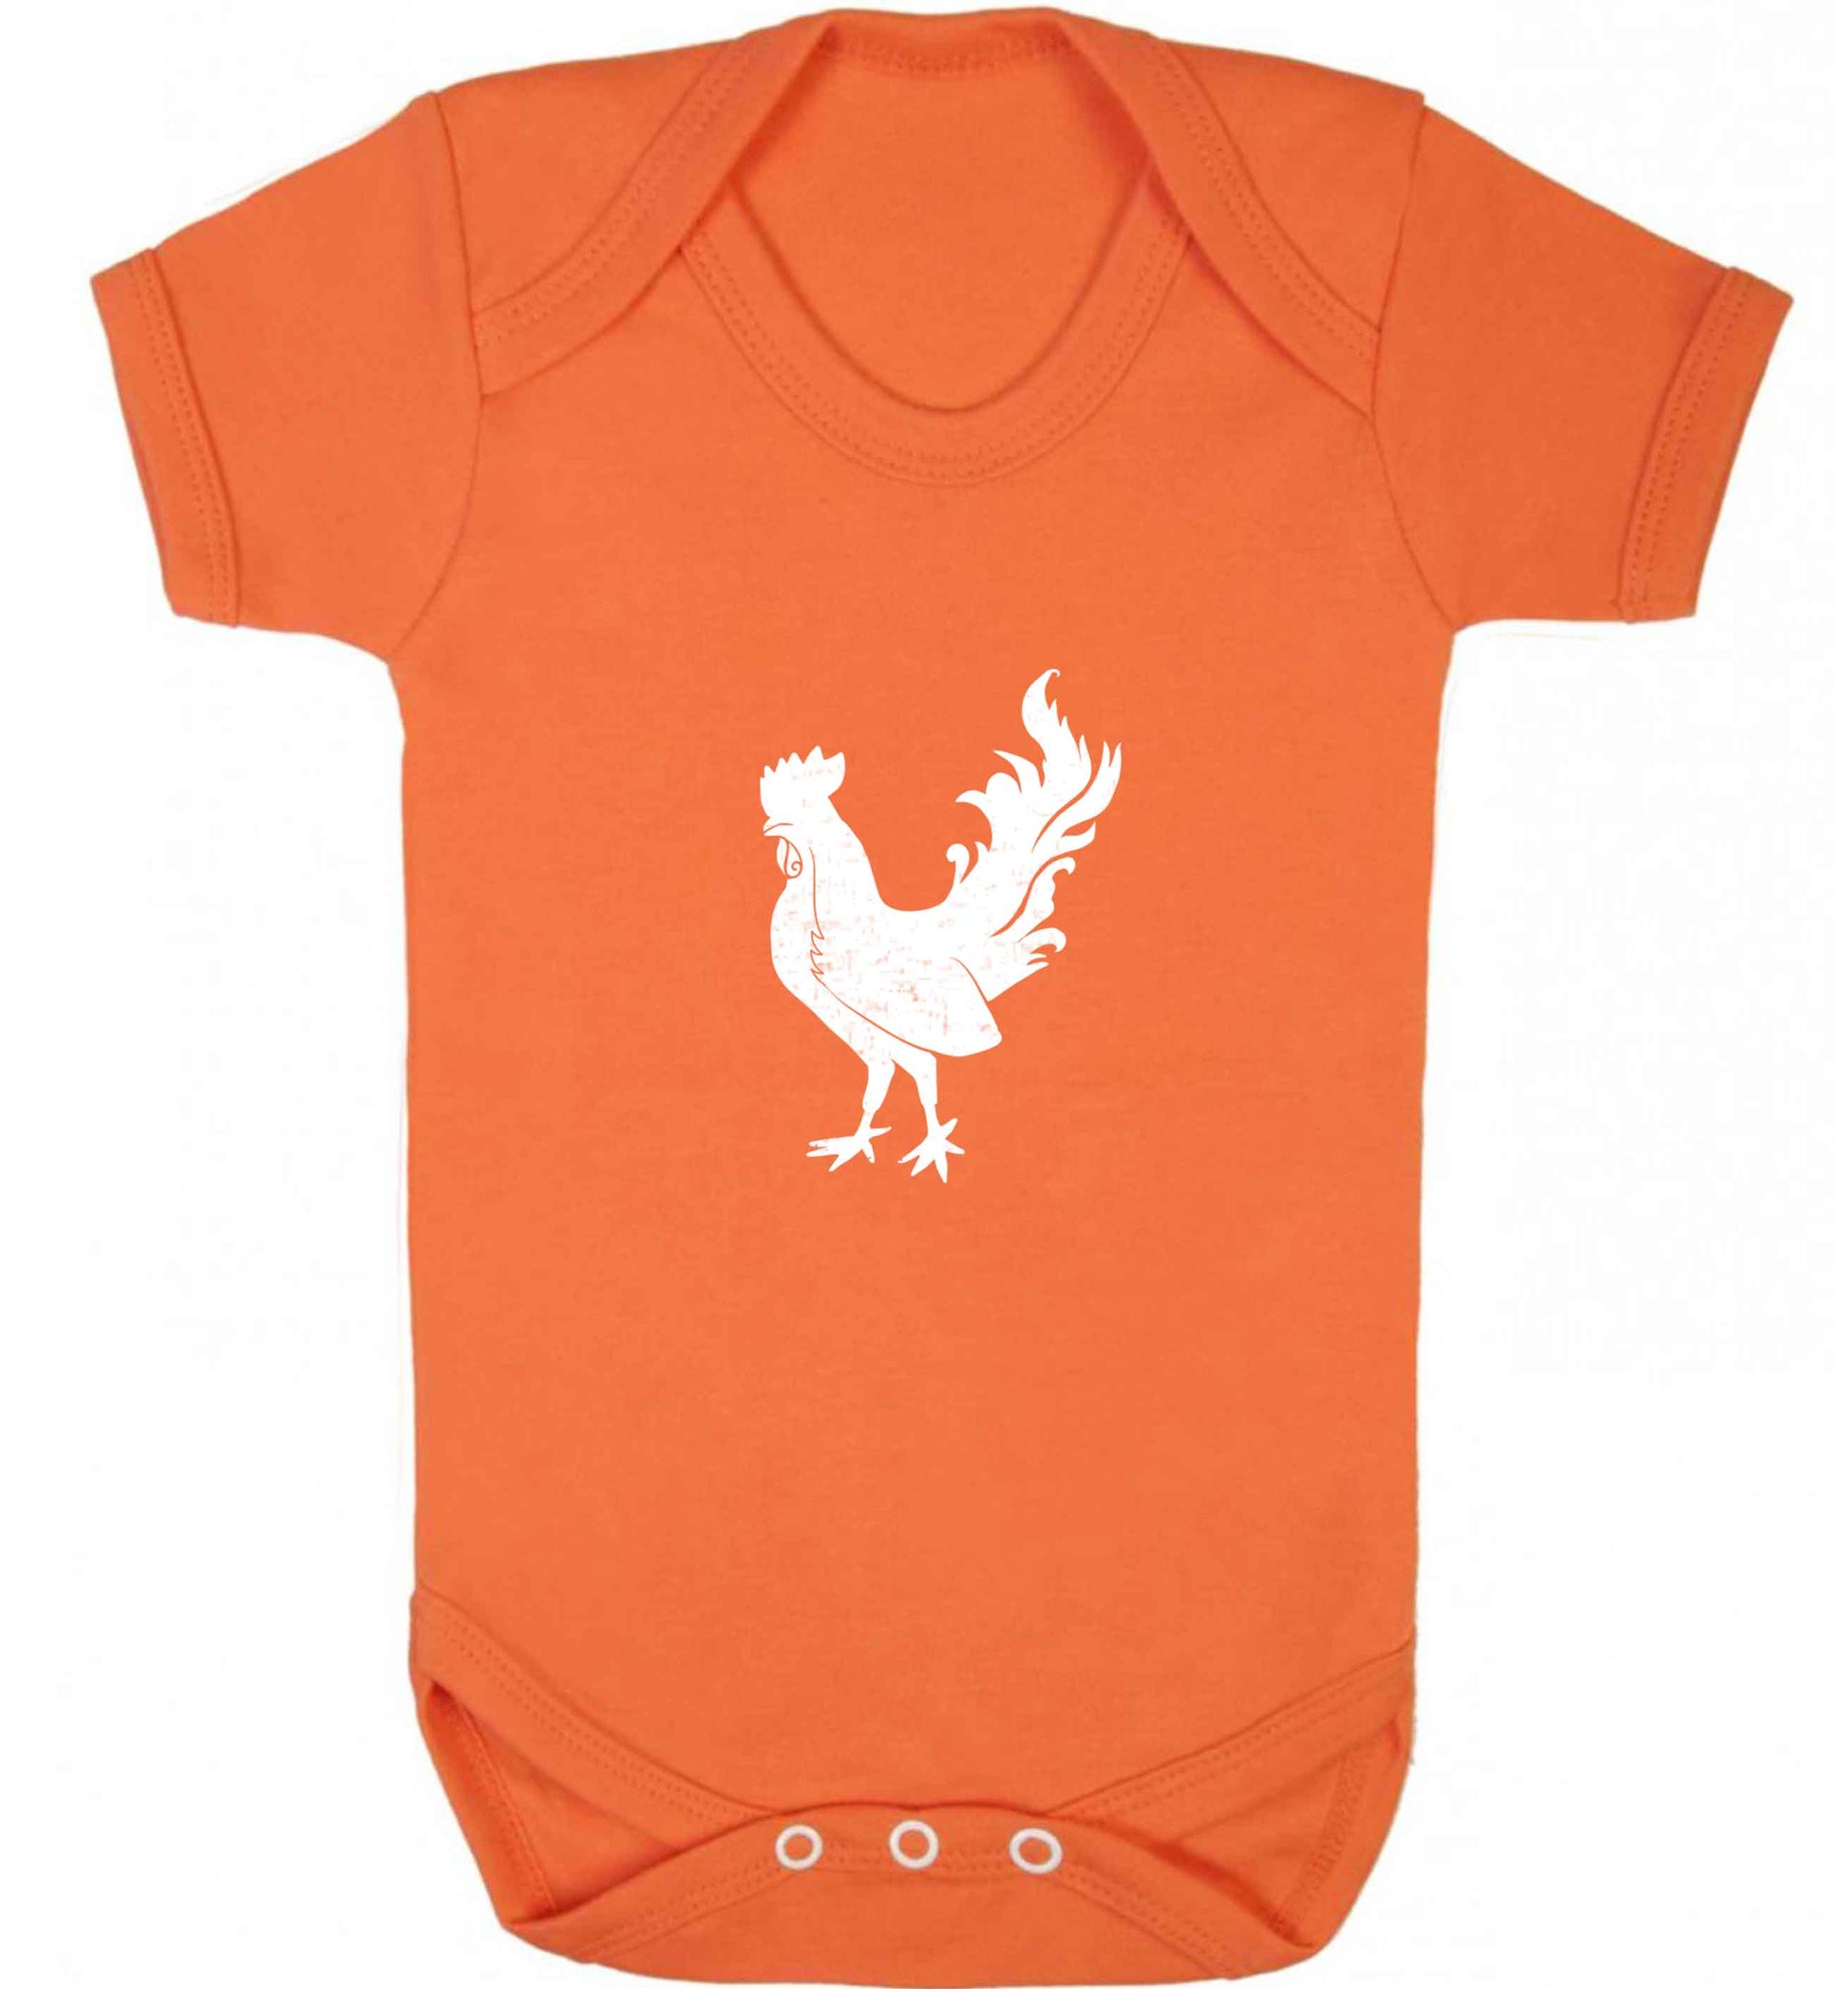 Rooster baby vest orange 18-24 months